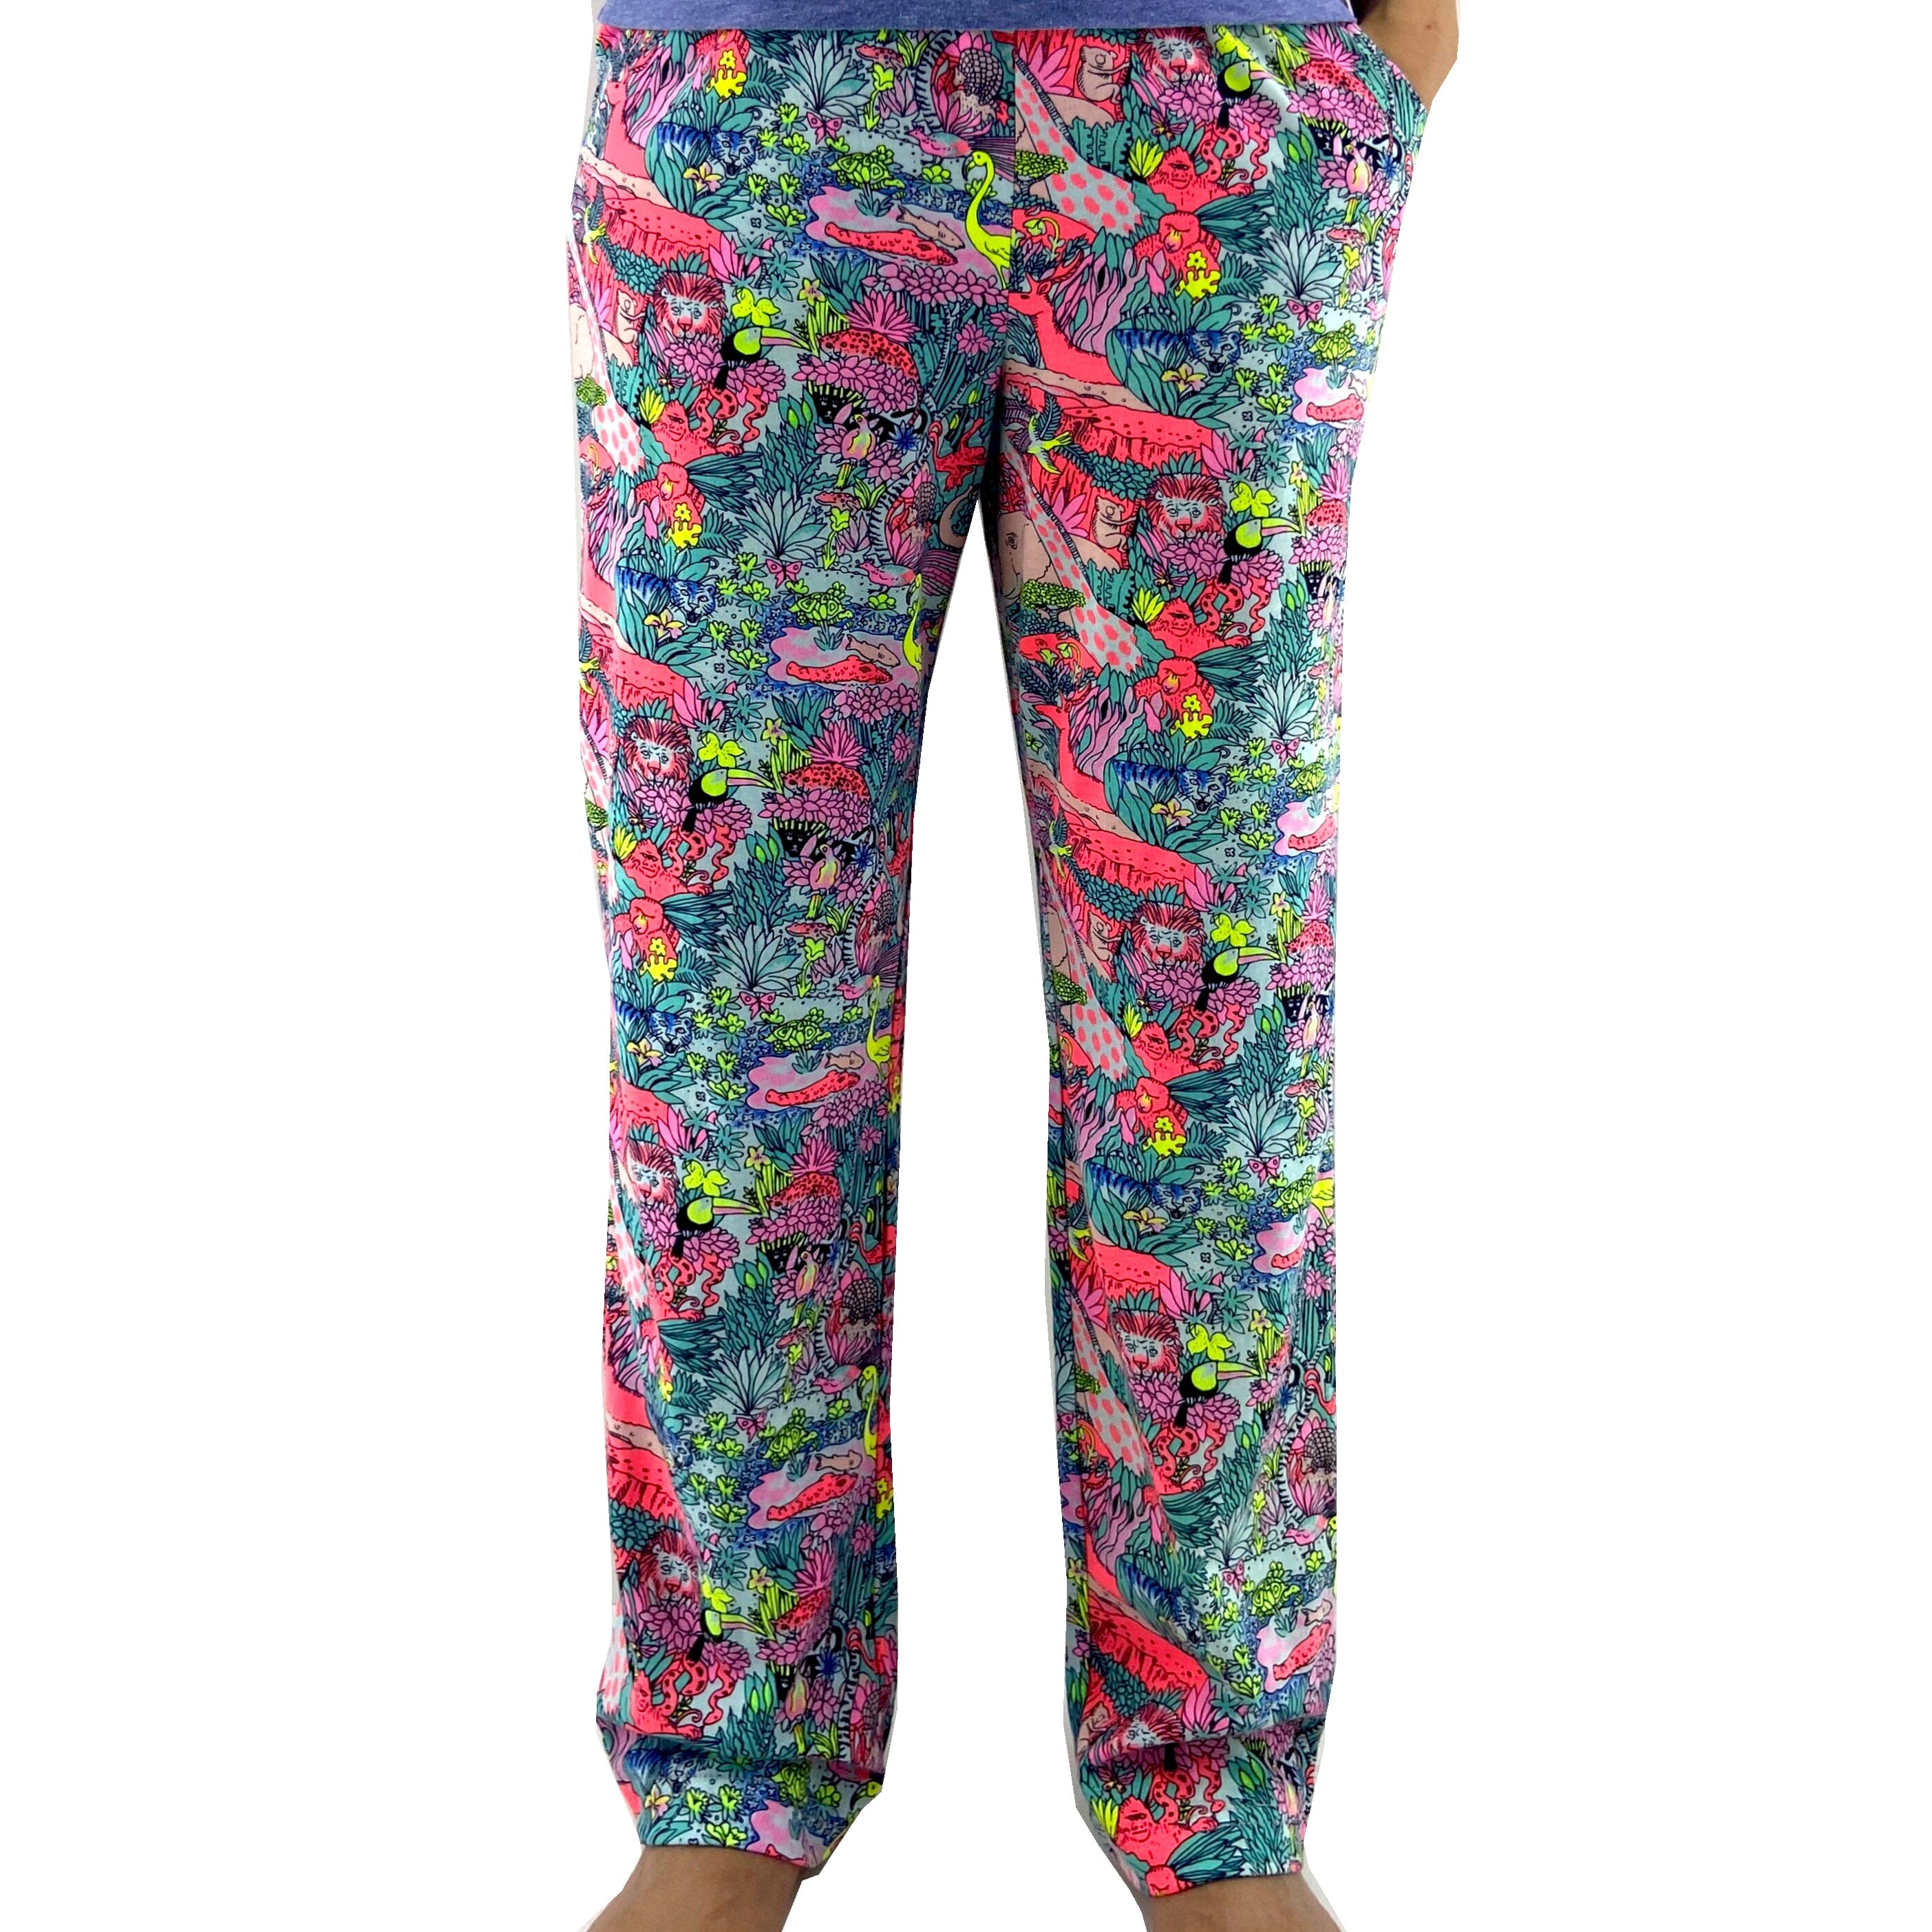 Women's Long Pajama Pants. Buy Colorful Patterned Lounge Pants Here